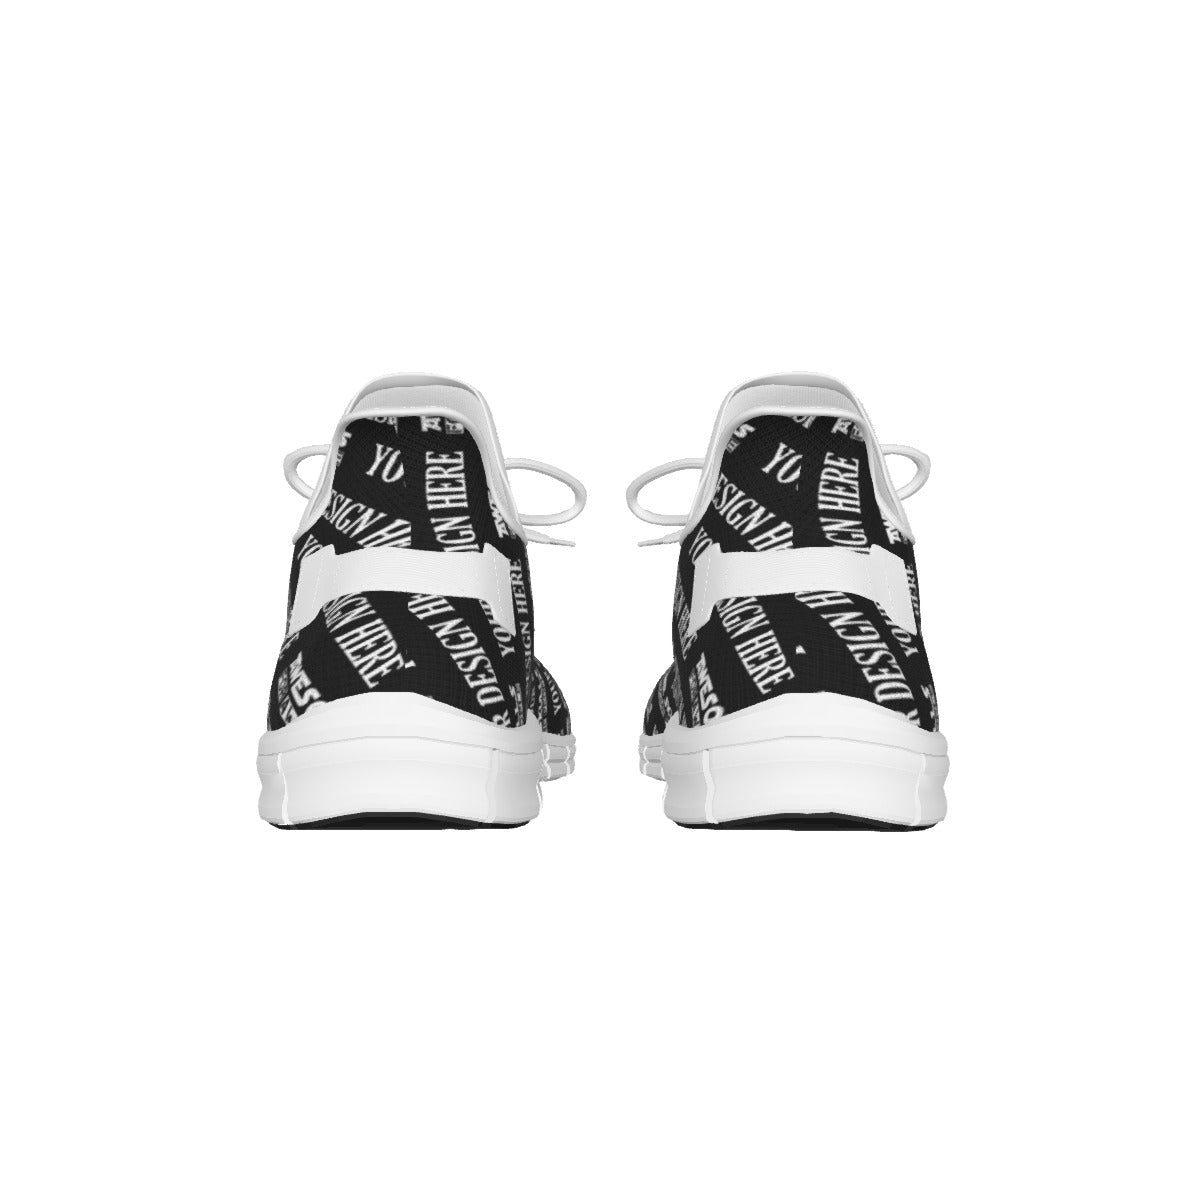 Custom Print on Demand POD Light woven running shoes